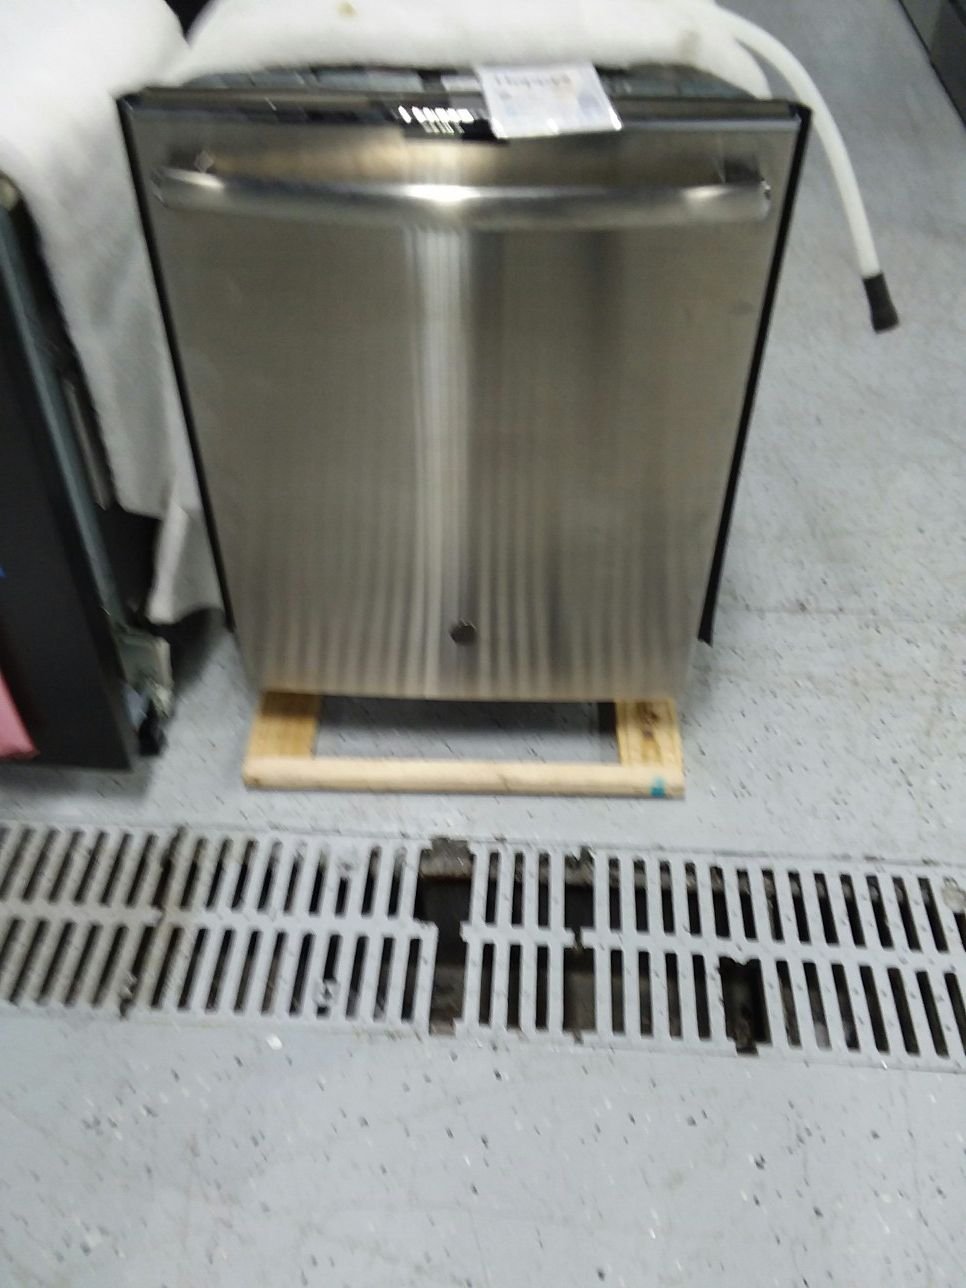 Stainless steel dishwasher